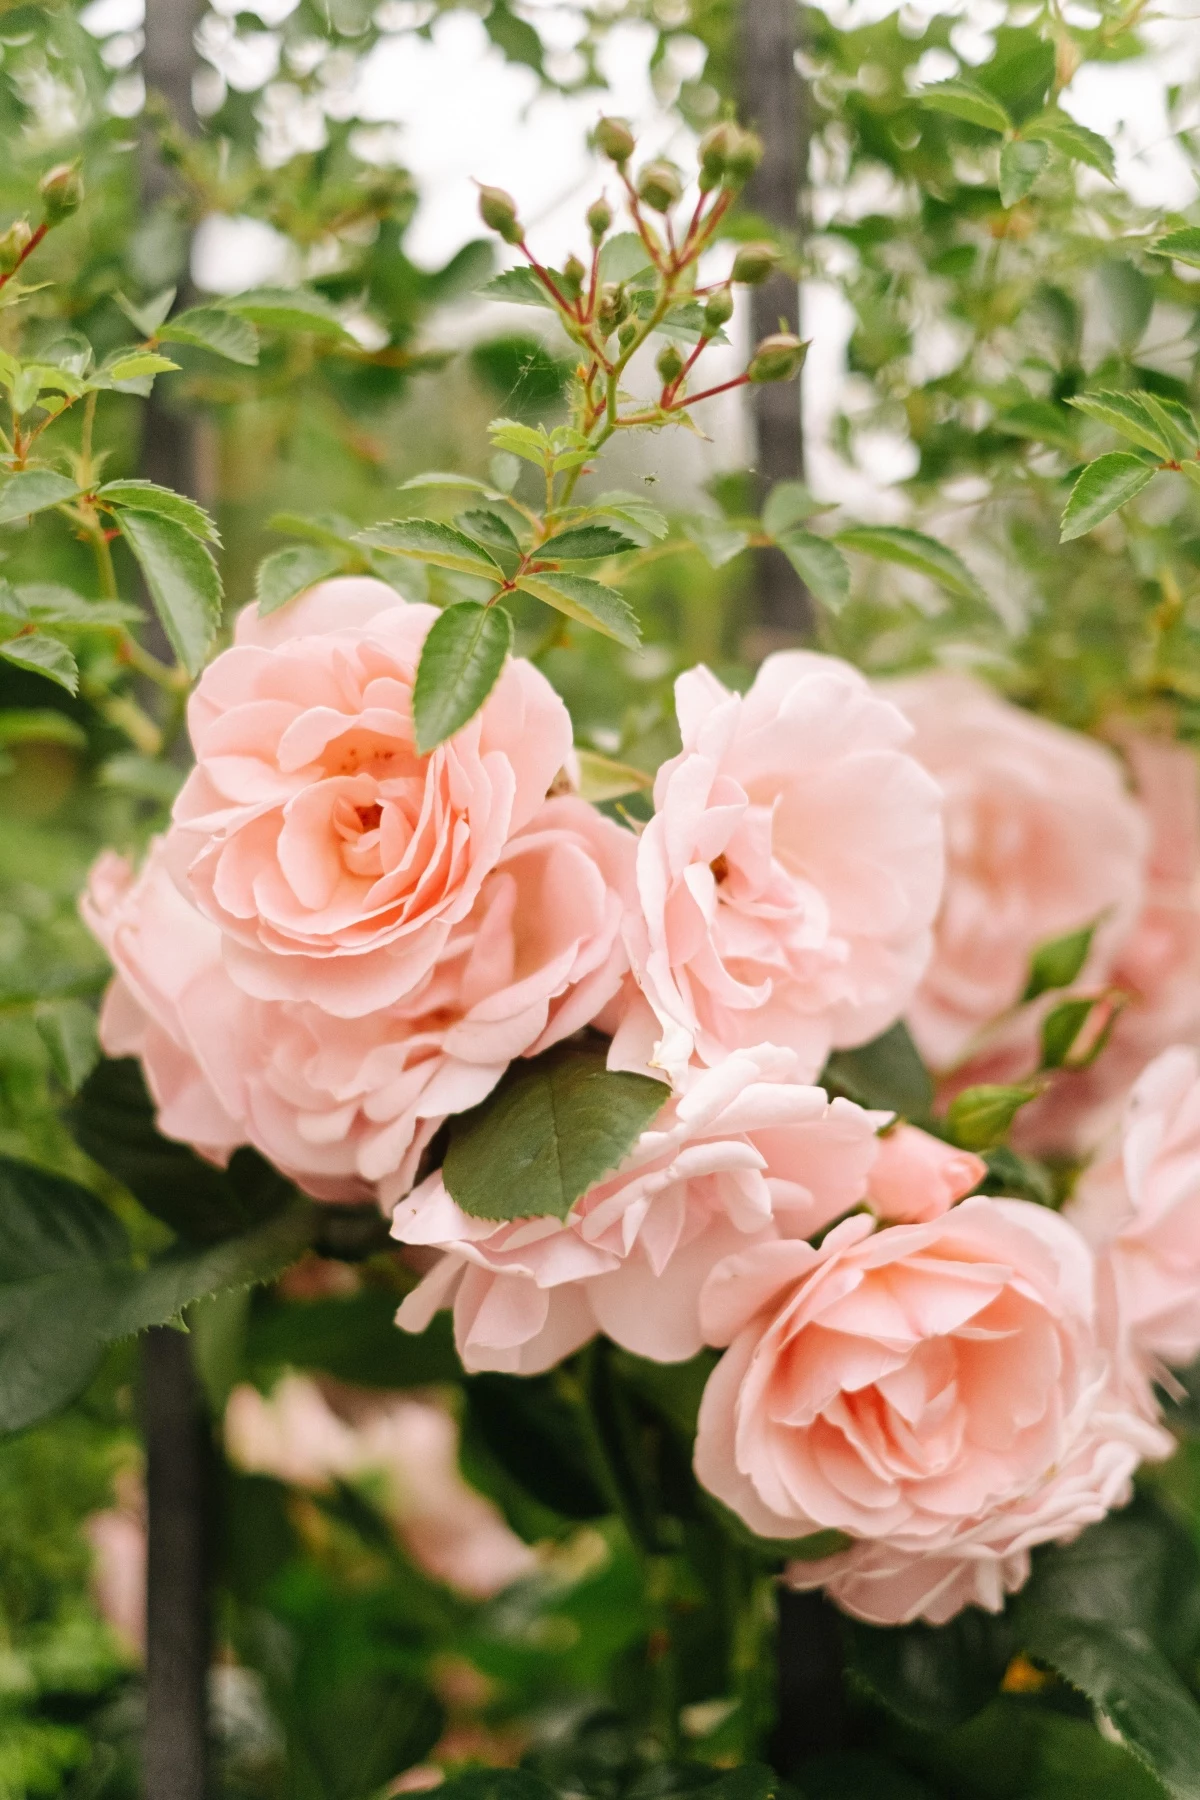 companion plants for roses pink rose bush